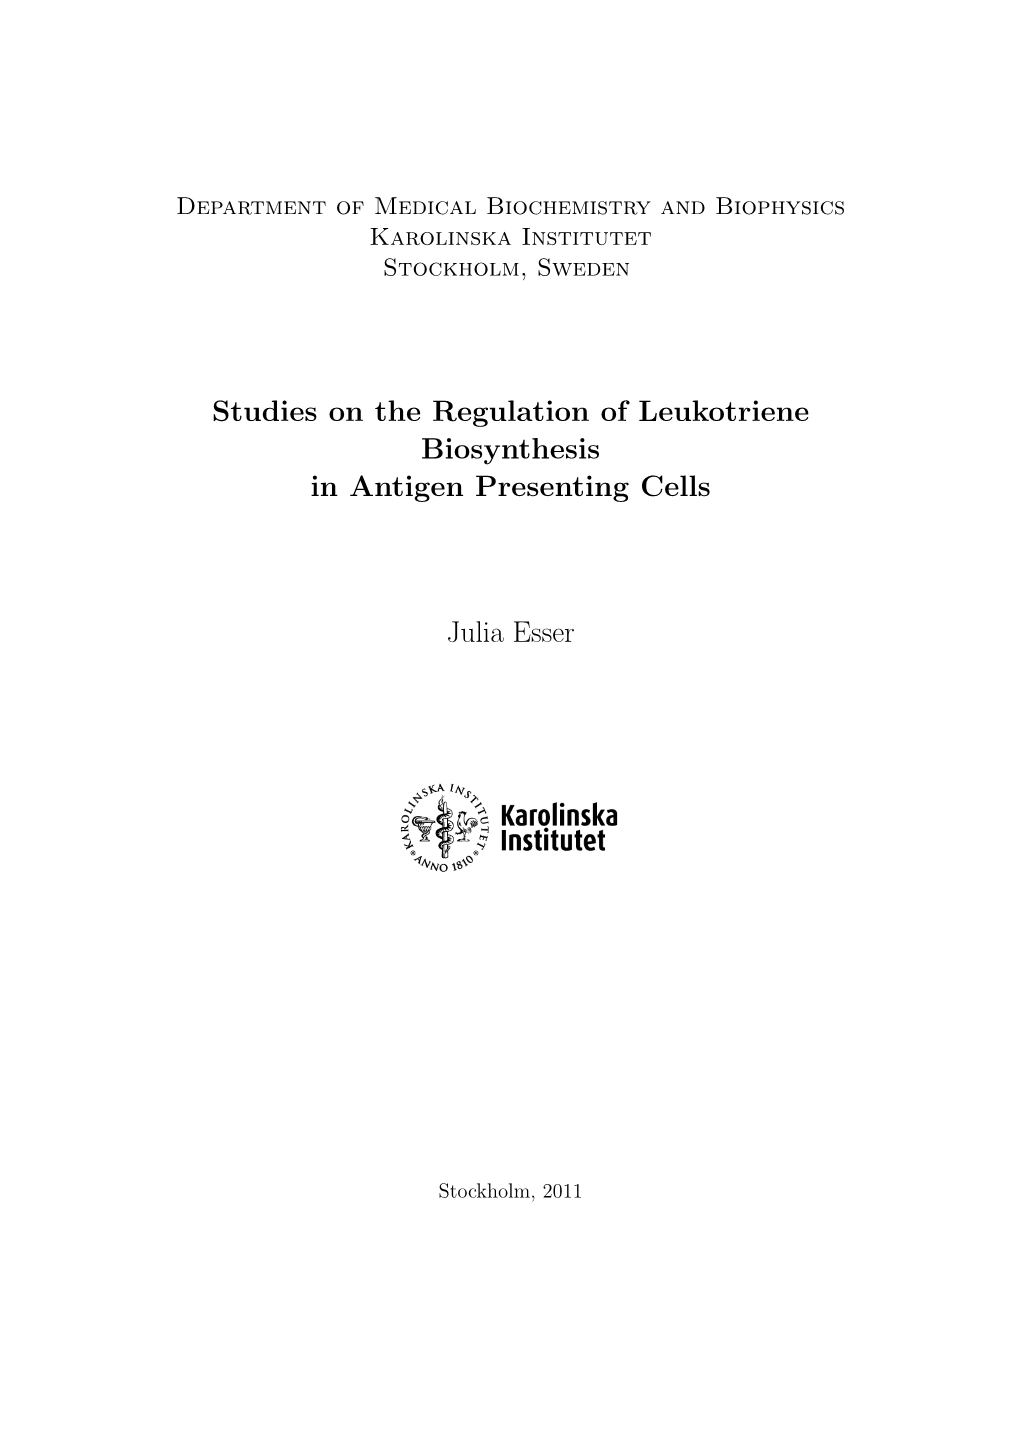 Studies on the Regulation of Leukotriene Biosynthesis in Antigen Presenting Cells